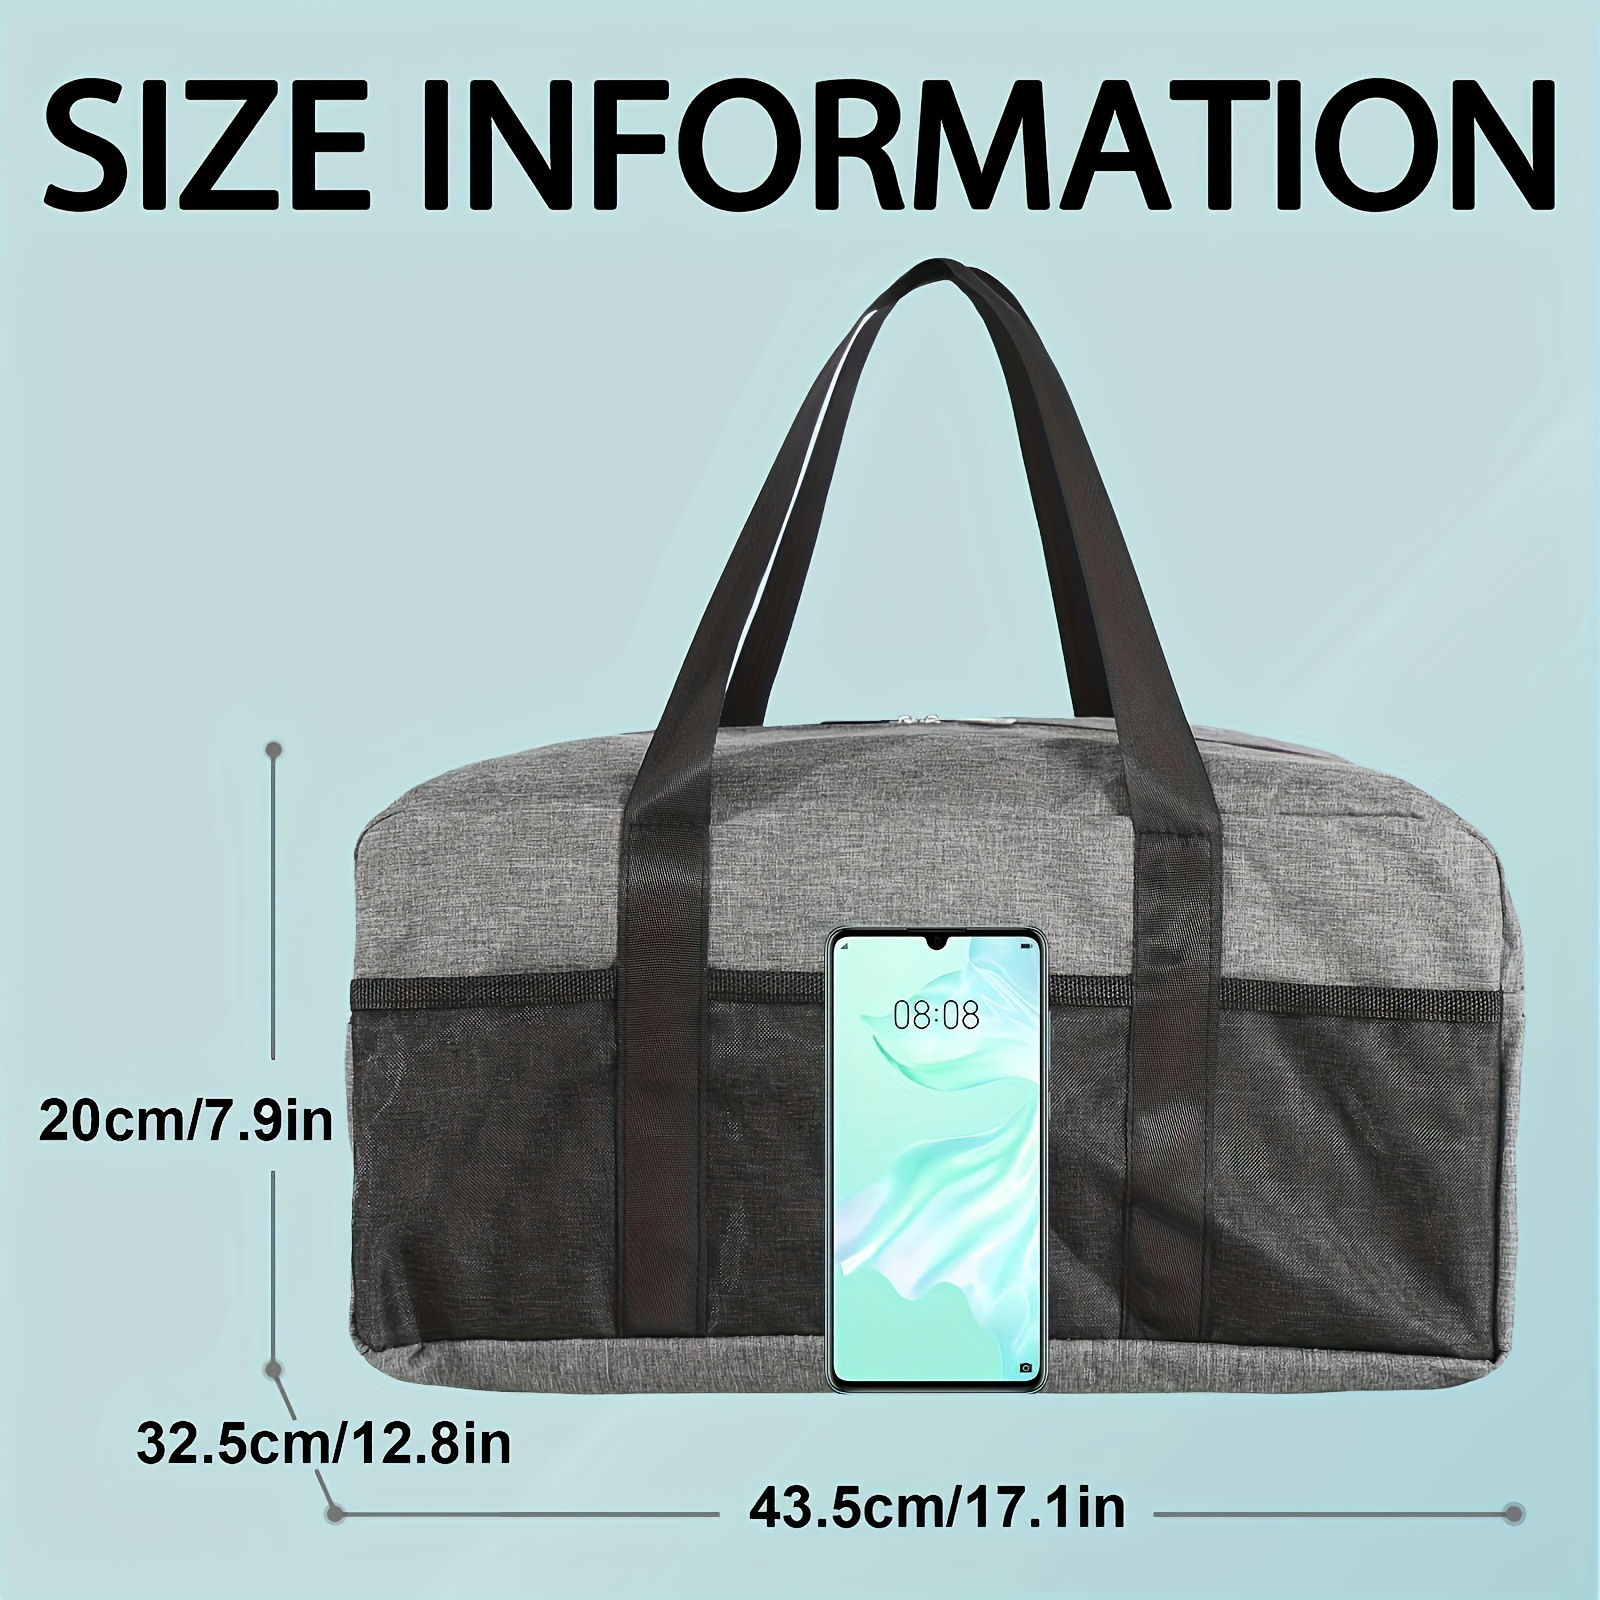 Duffel Bags & Gym Bags: Packable & Waterproof for Travel & Outdoors